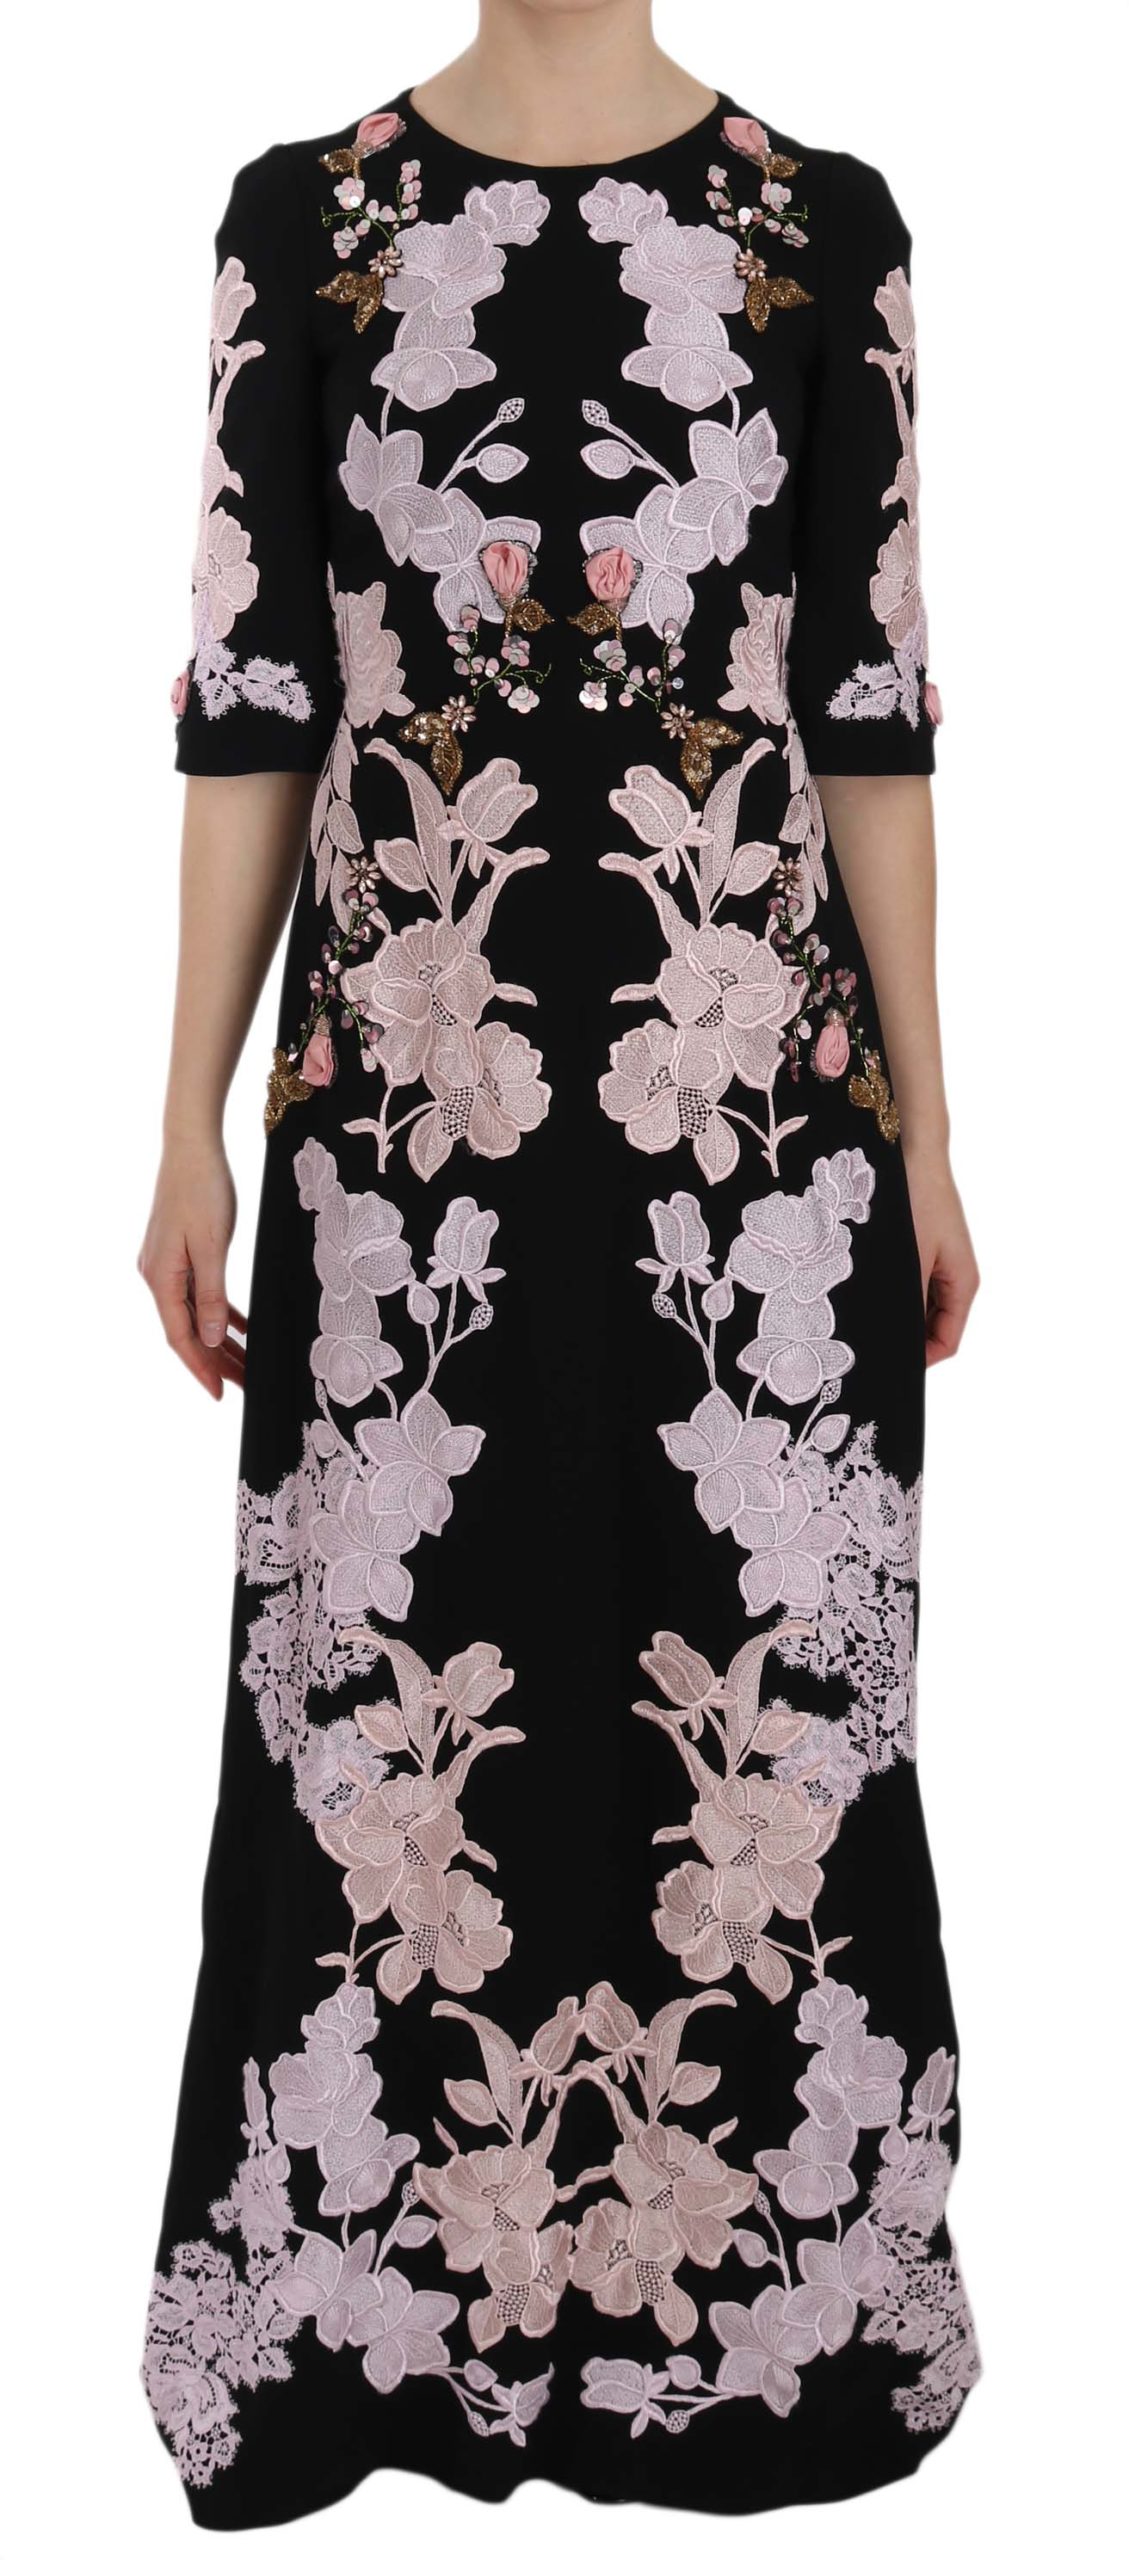 Dolce & Gabbana Women's Floral Lace Crystal Dress Black DR1660 - IT40|S